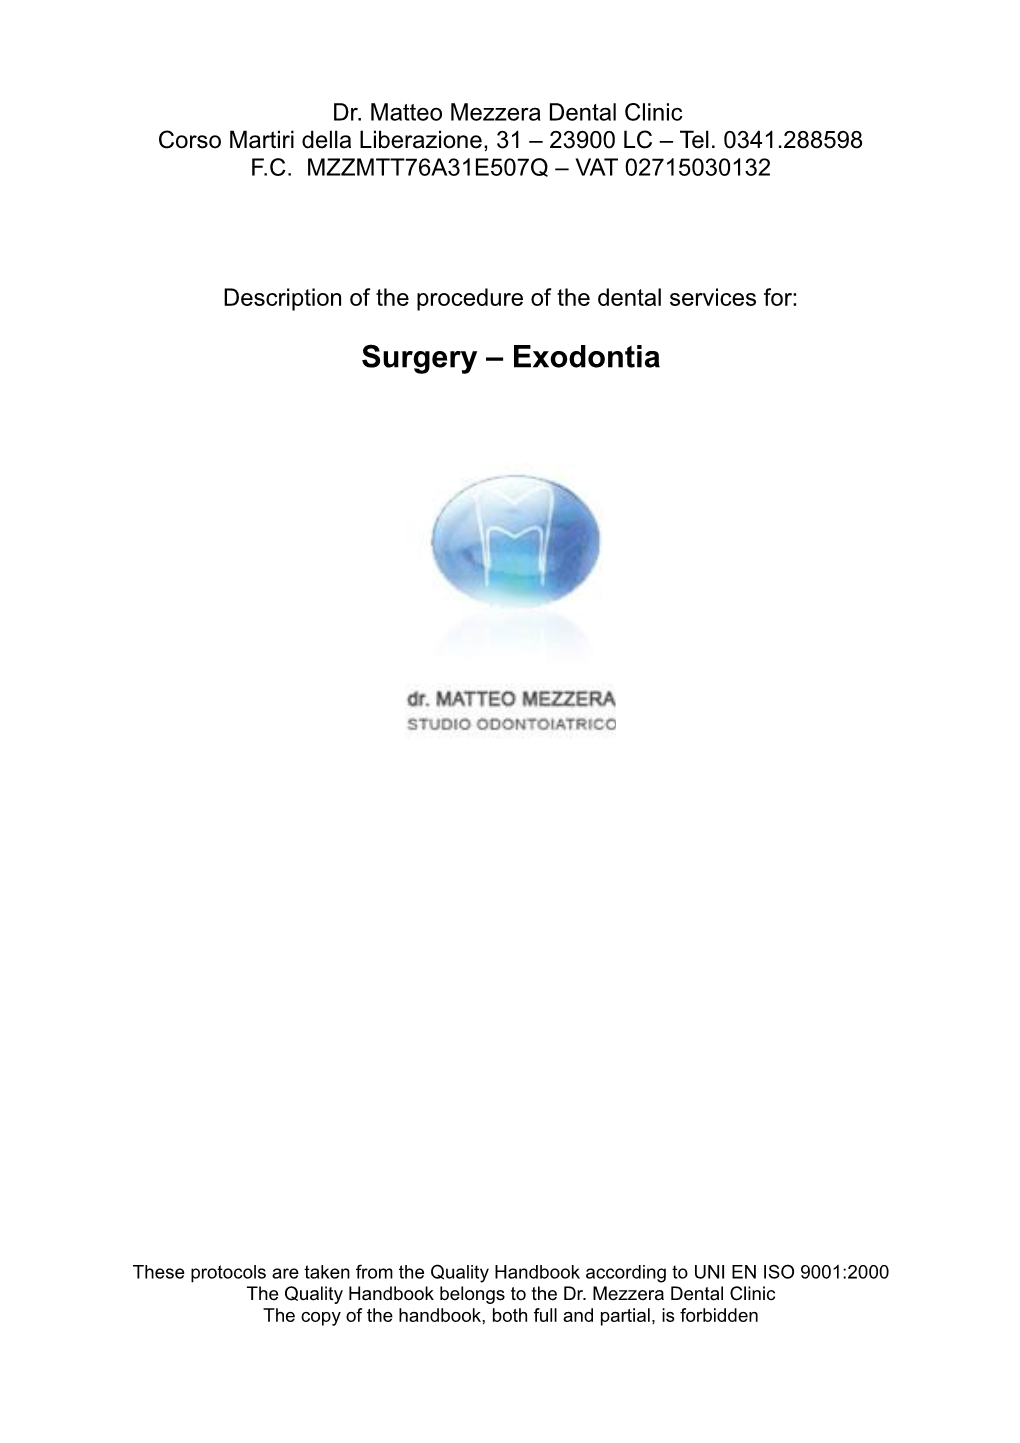 Surgery – Exodontia